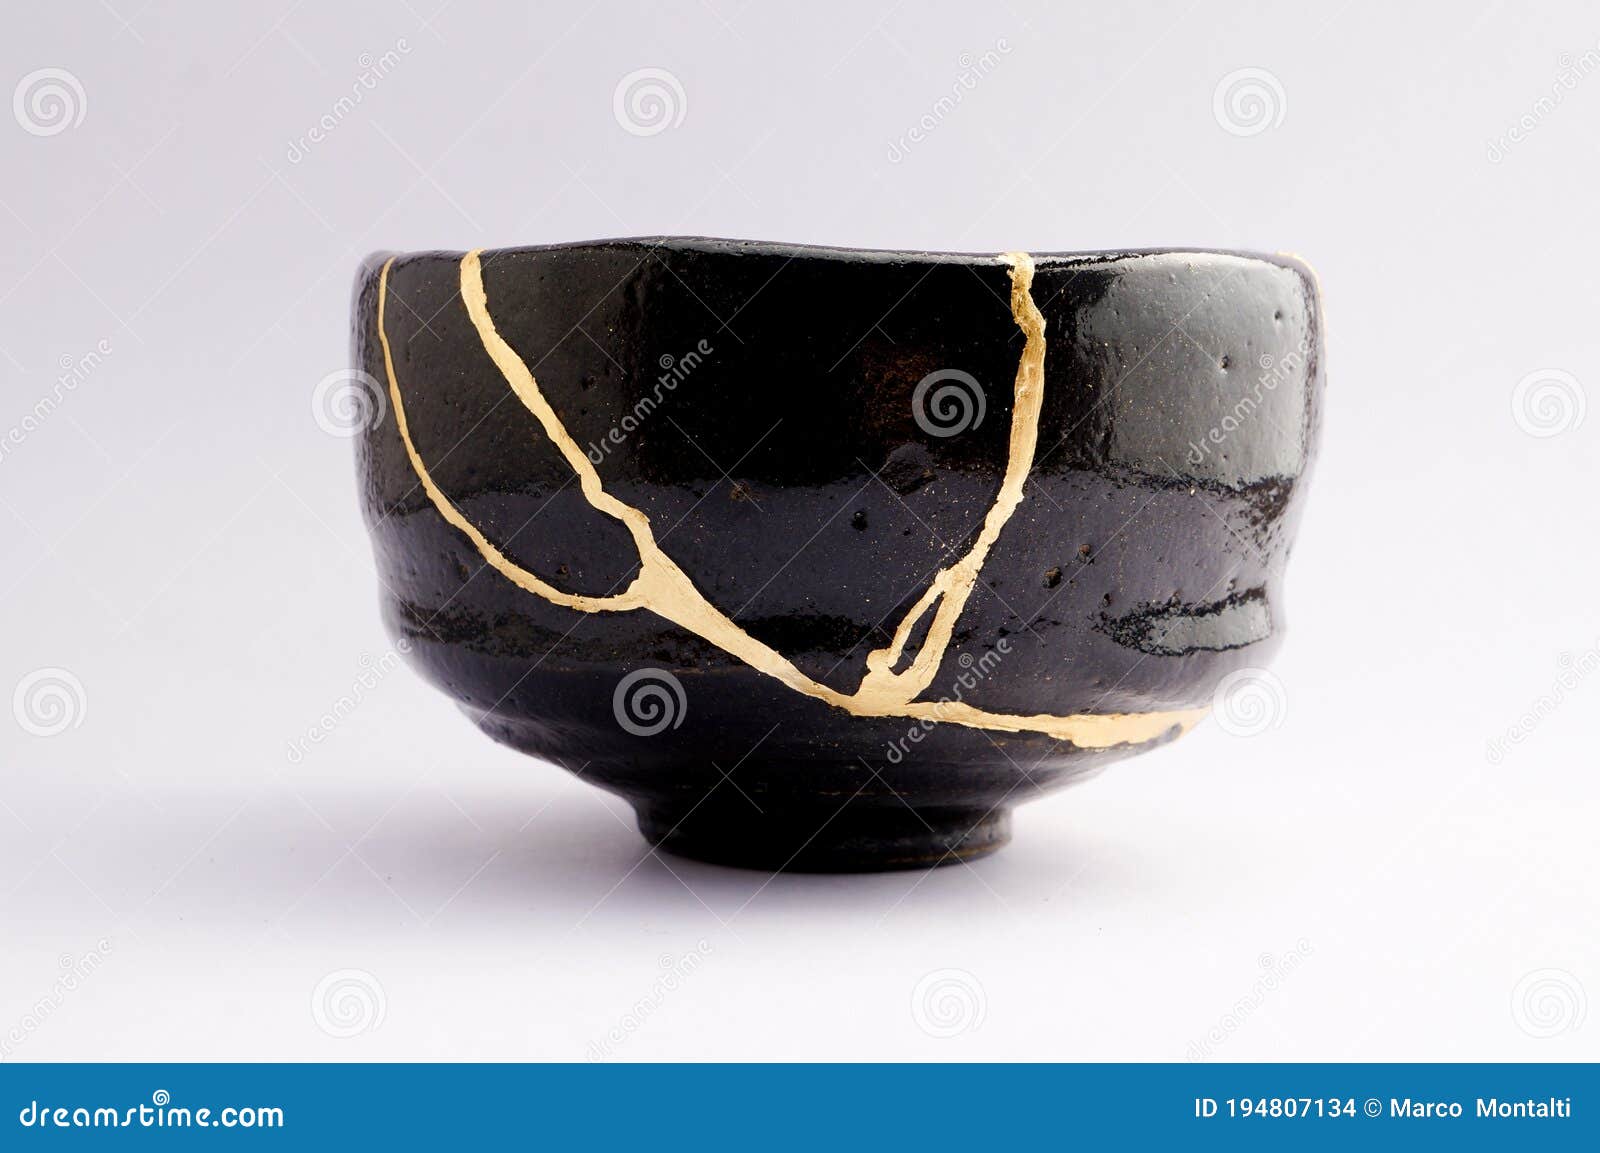 antique beautiful broken raku bowl restored with kintsugi gold technique